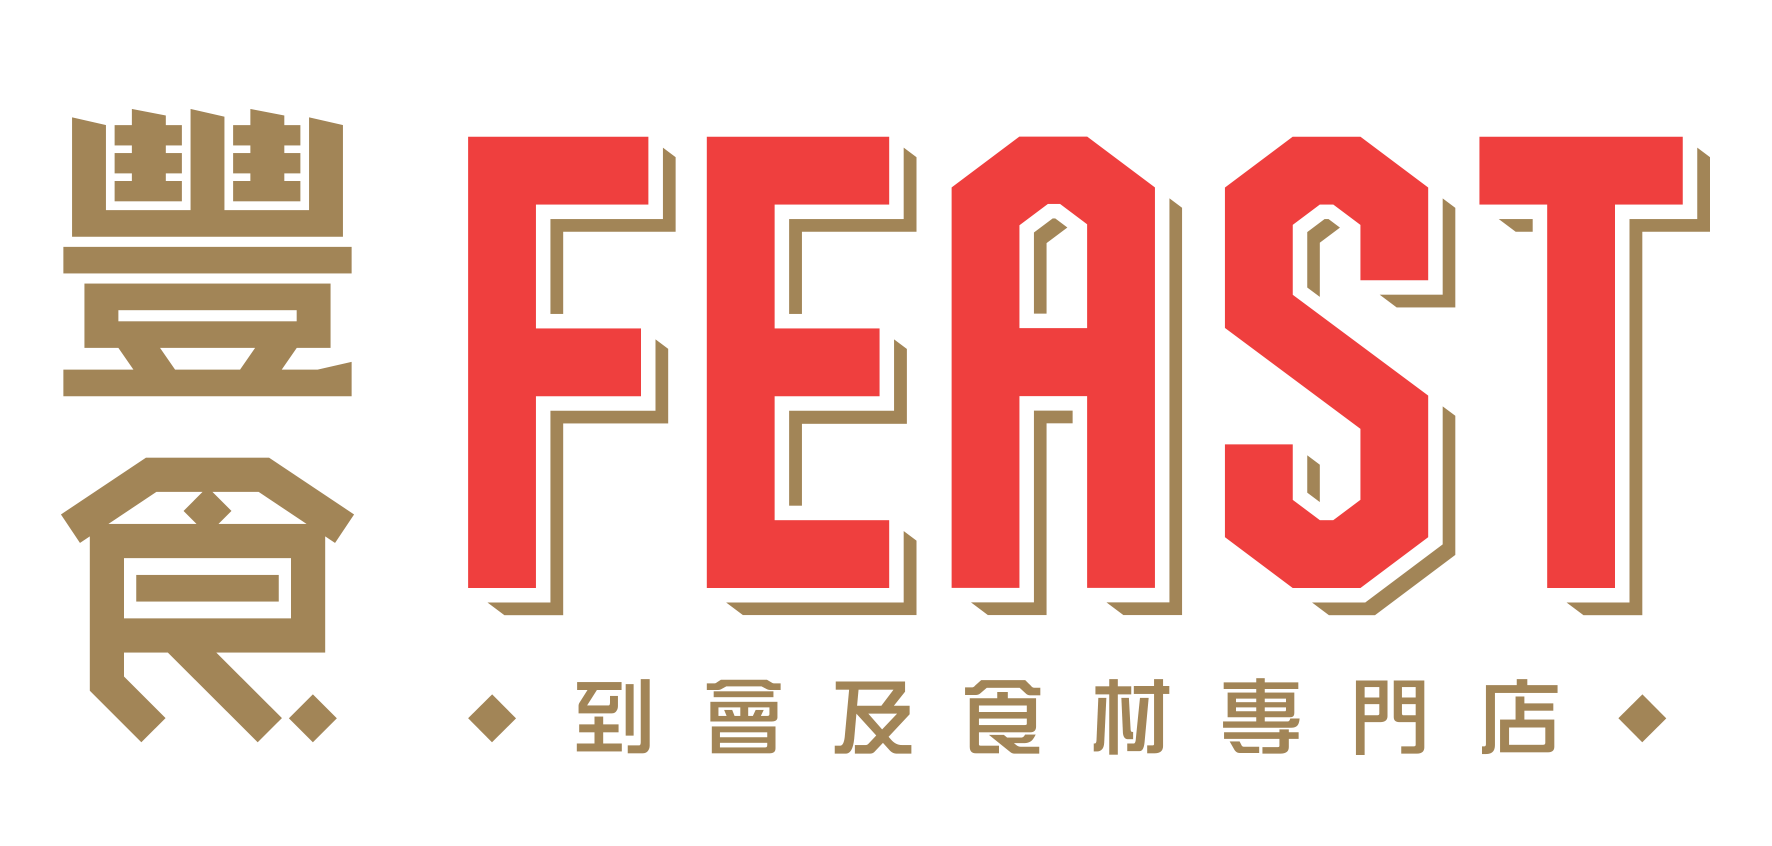 Footer Feast logo